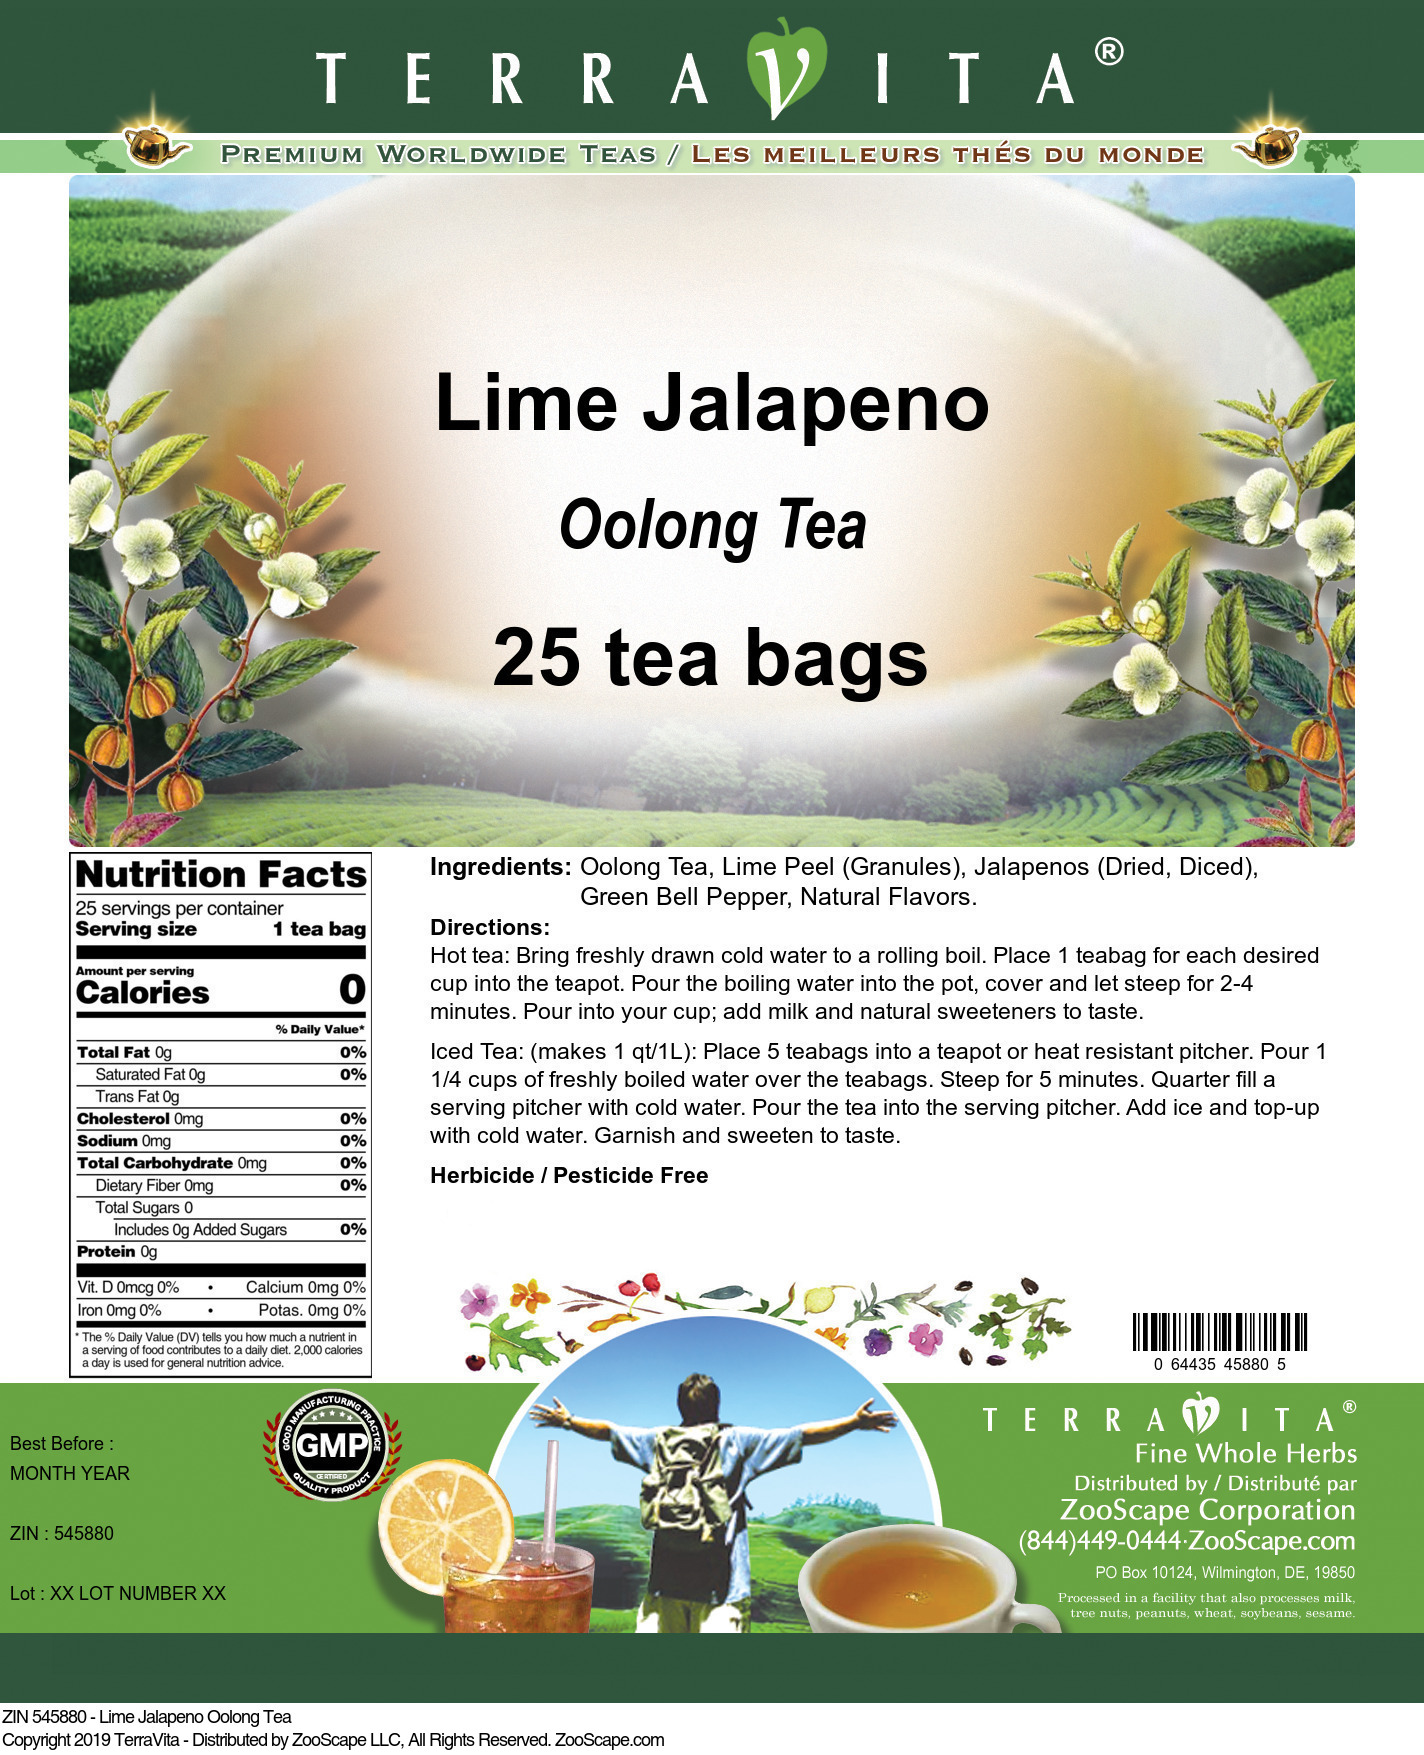 Lime Jalapeno Oolong Tea - Label